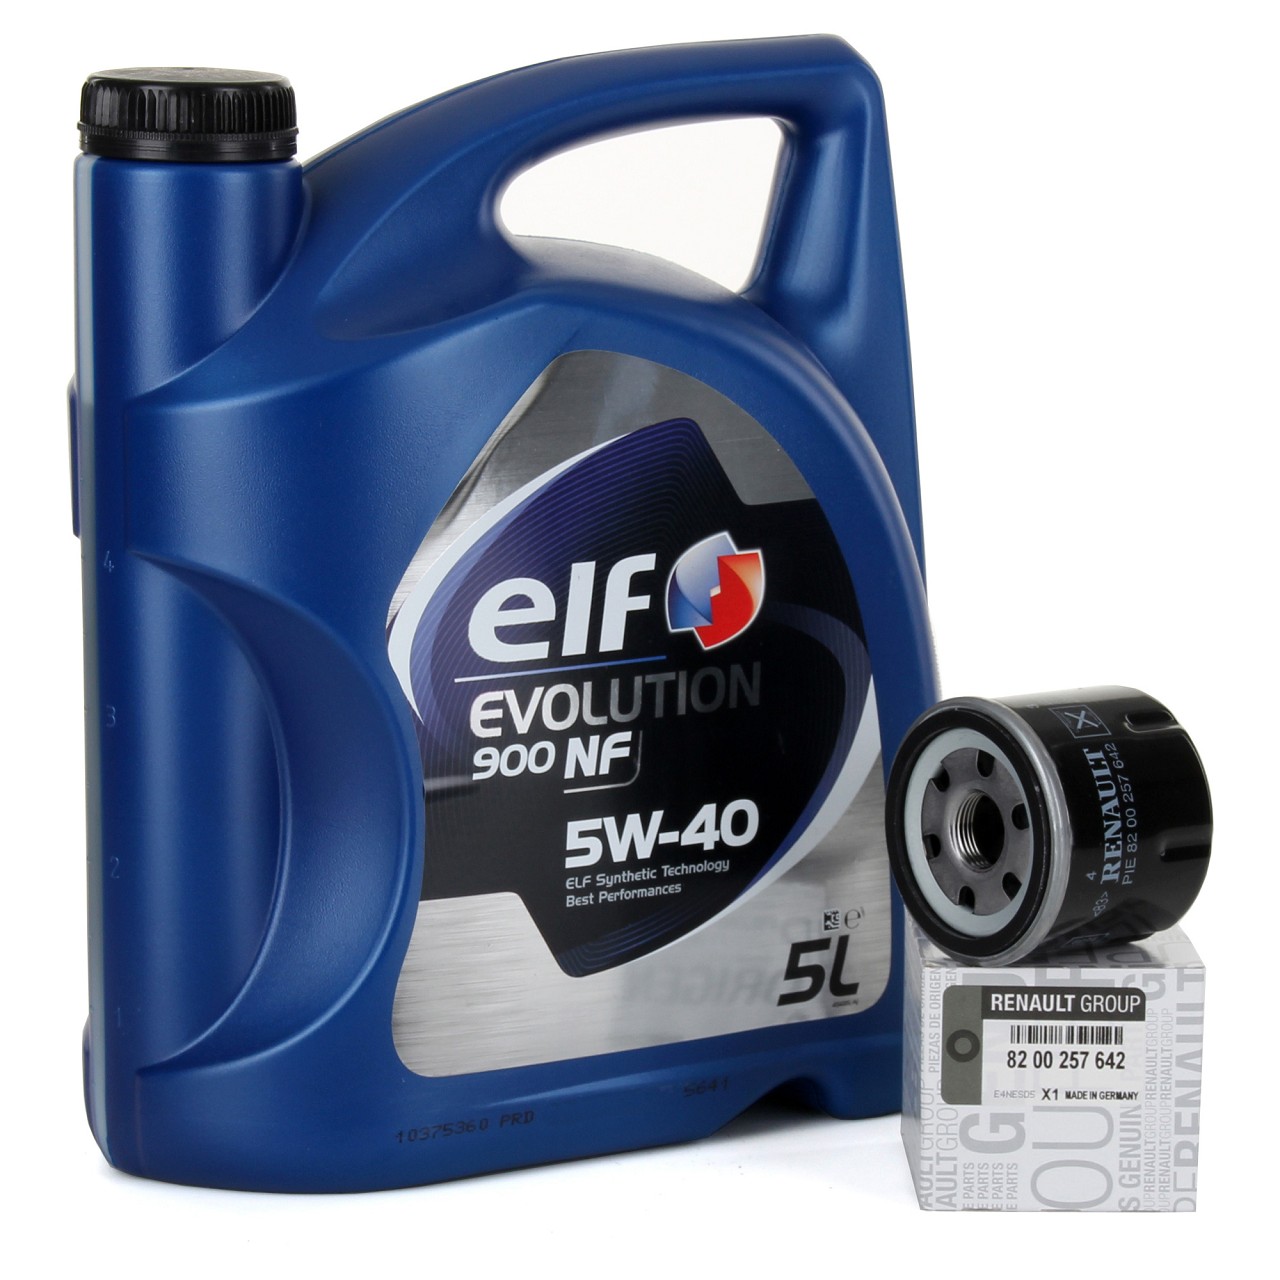 5L elf Evolution 900 NF 5W-40 Motoröl + ORIGINAL Renault Ölfilter 8200257642